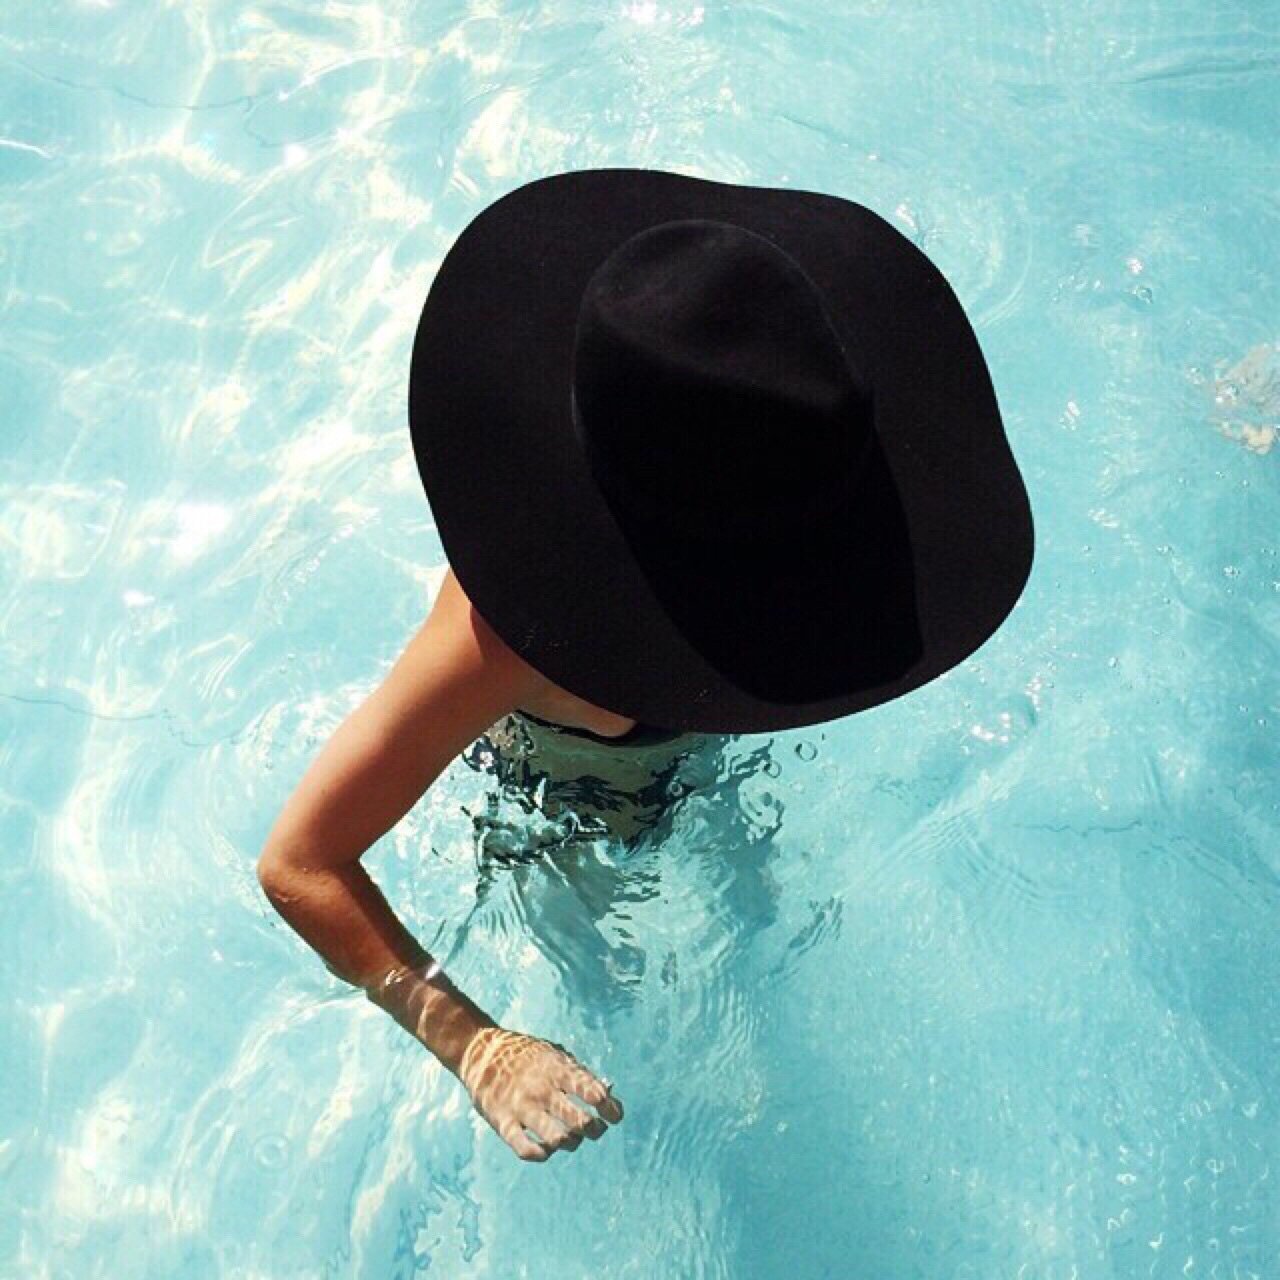 Шляпа на пляже. Девушка в шляпе на море. Девушка в шляпе на пляже. Шляпа для пляжа. Девушка в шляпке у моря.